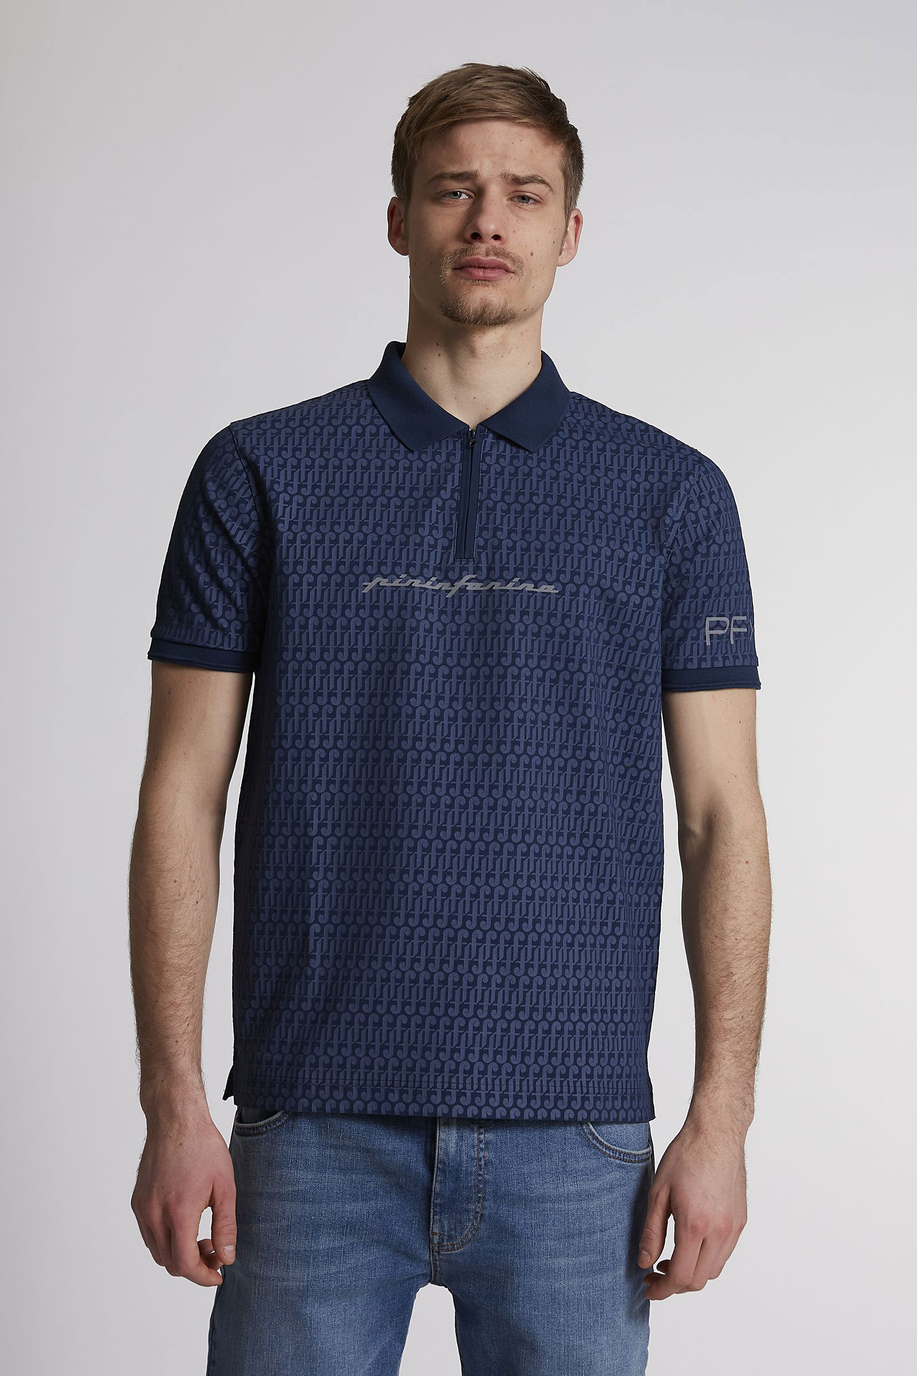 Herren-Poloshirt mit kurzen Ärmeln aus 100 % Baumwolle im Regular Fit - -20% | step 1 | all | La Martina - Official Online Shop